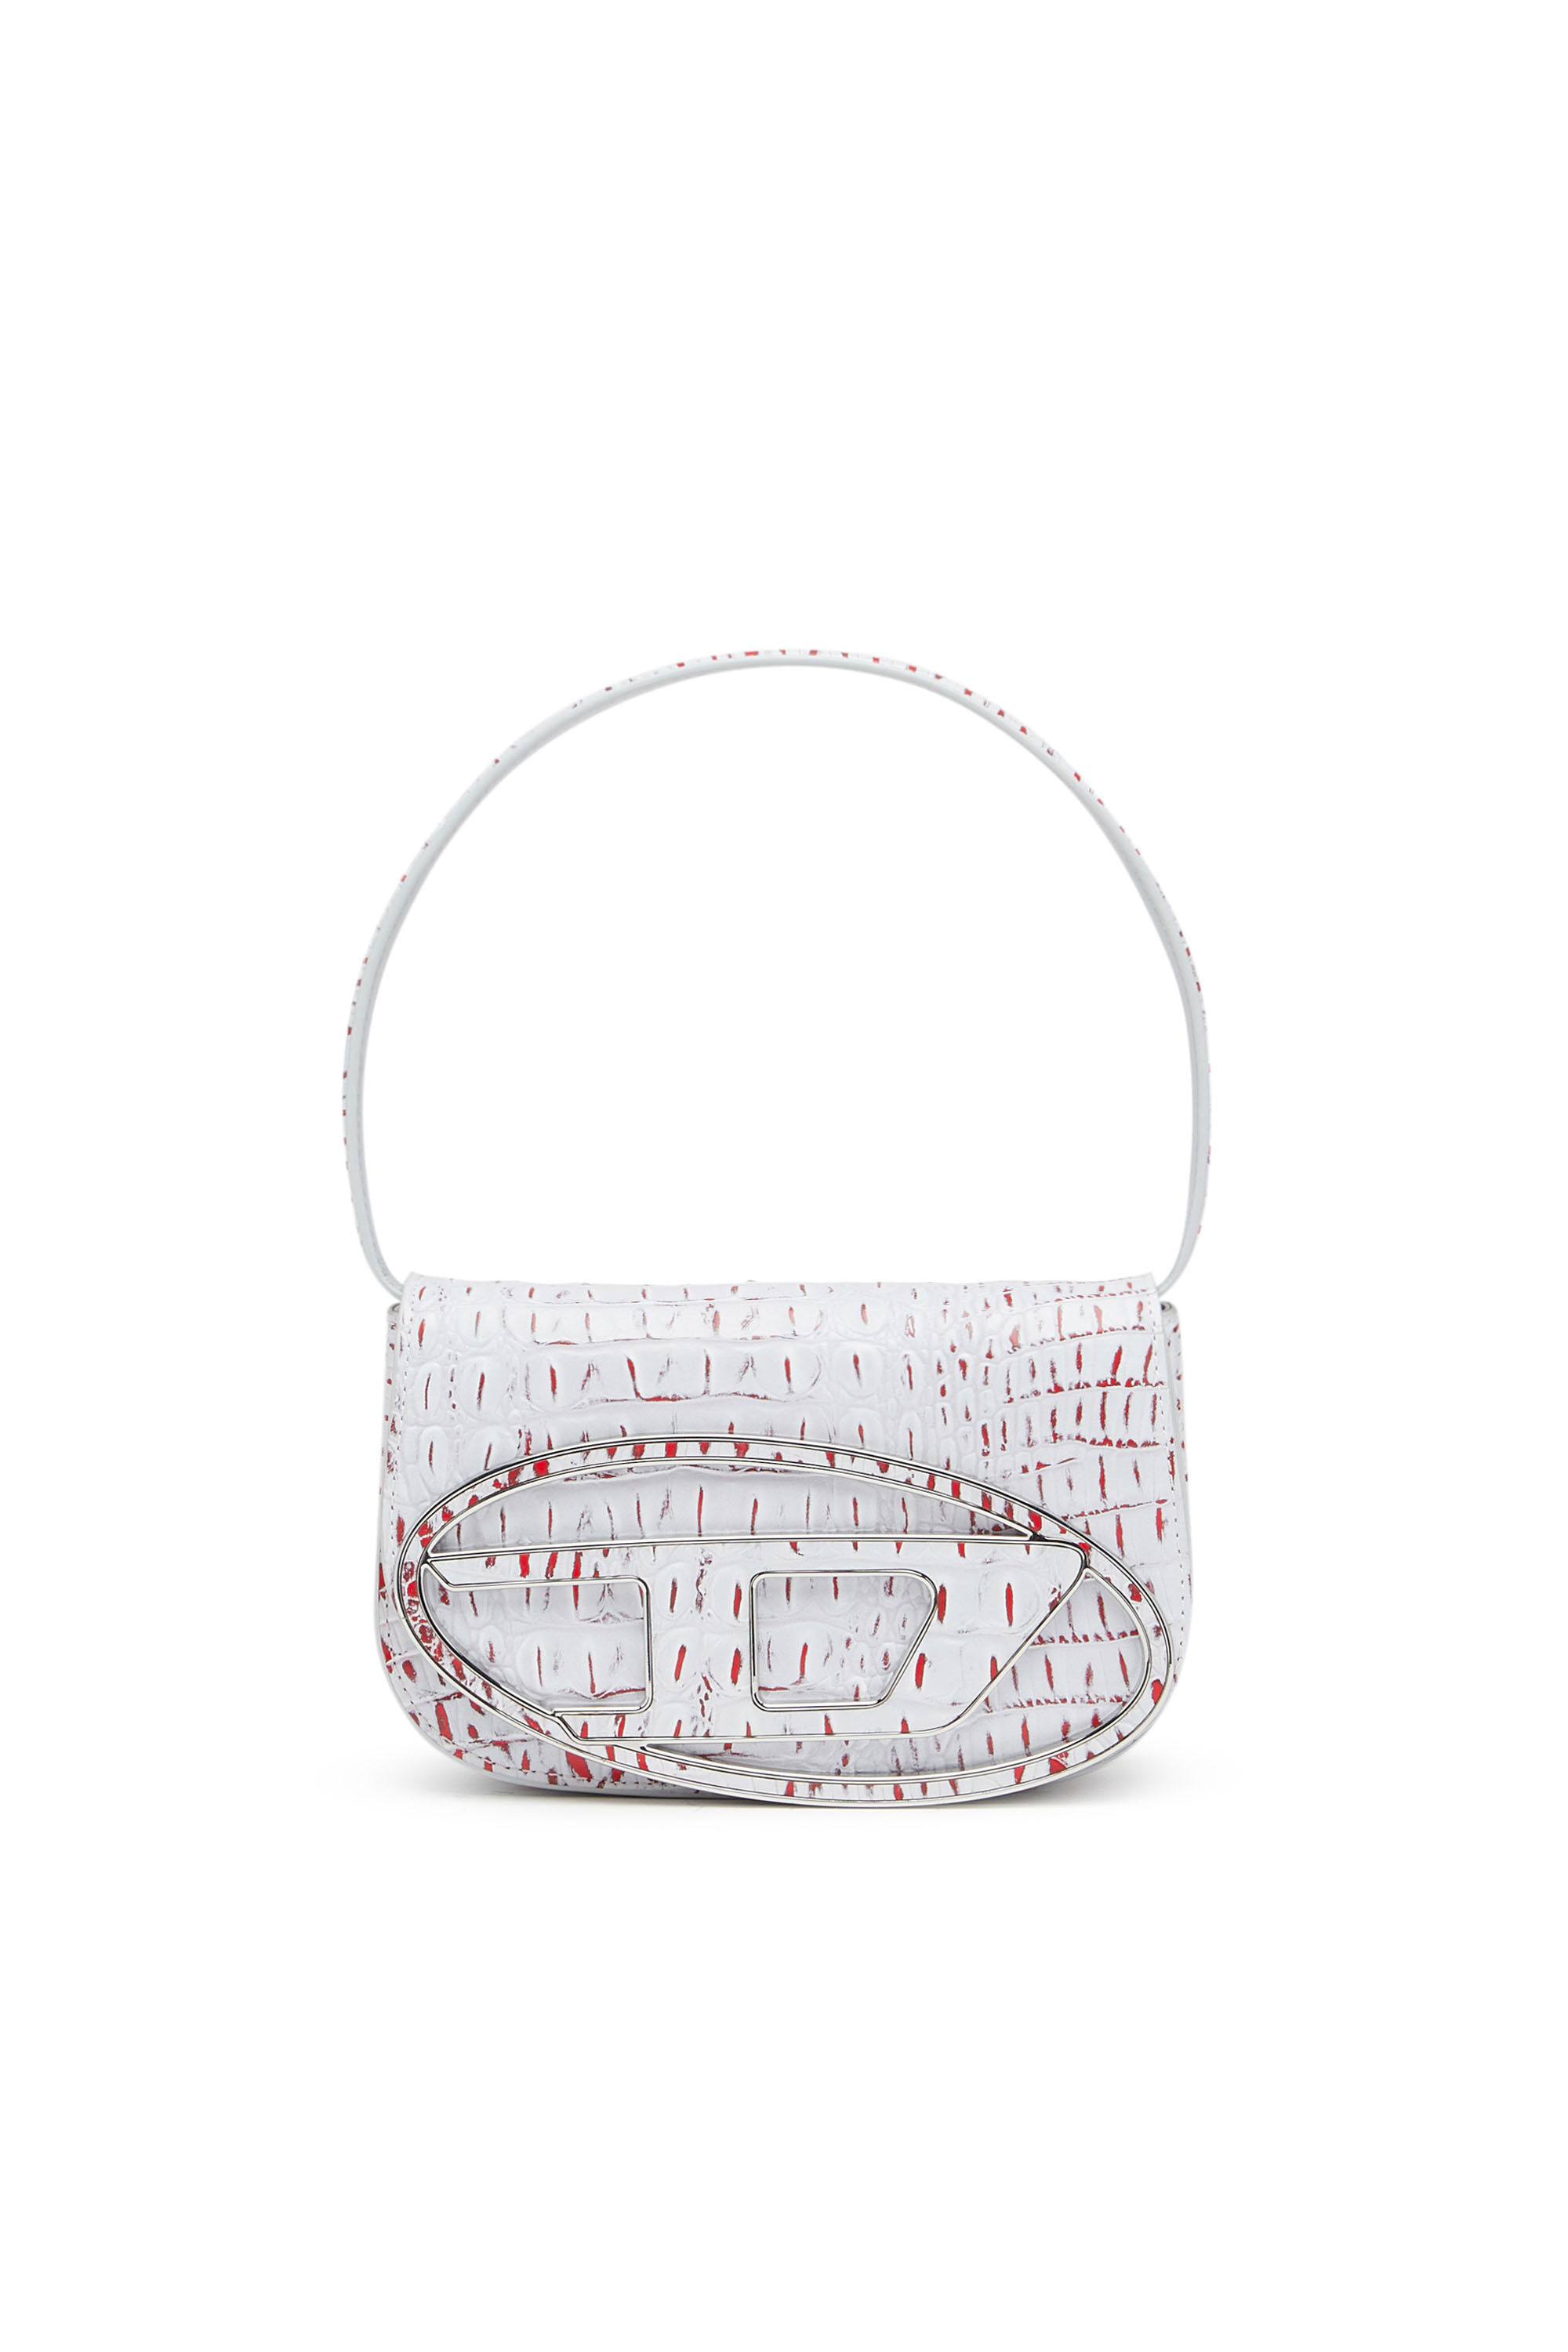 1DR Woman: Croc-print shoulder bag with oval D logo | Diesel